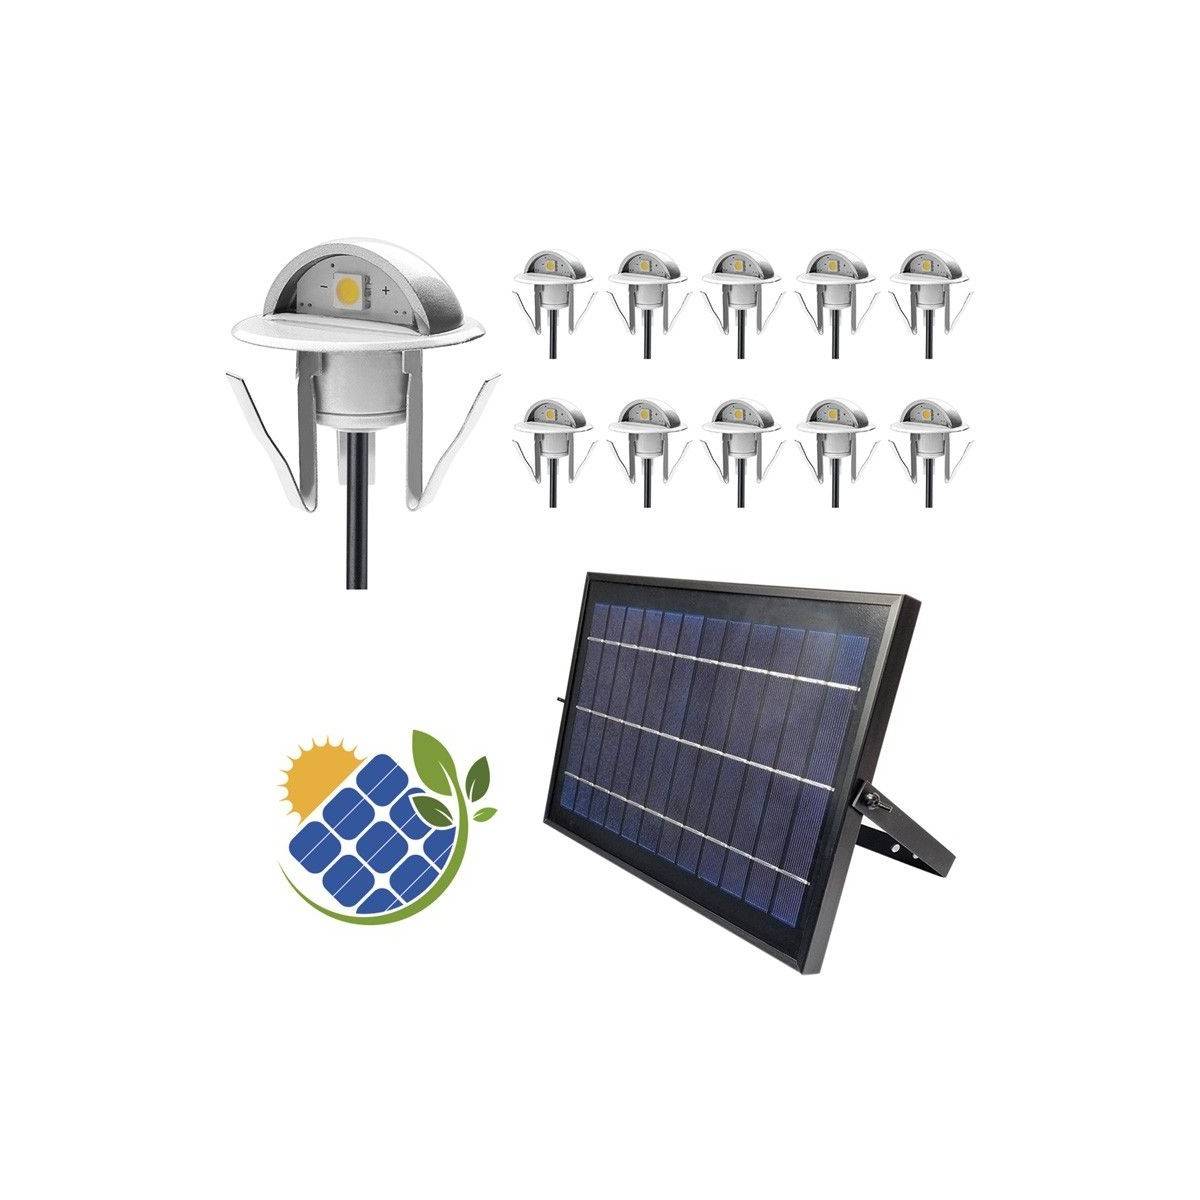 Packung mit 10 Solar-LED-Einbaustrahlern mit Solarpanel